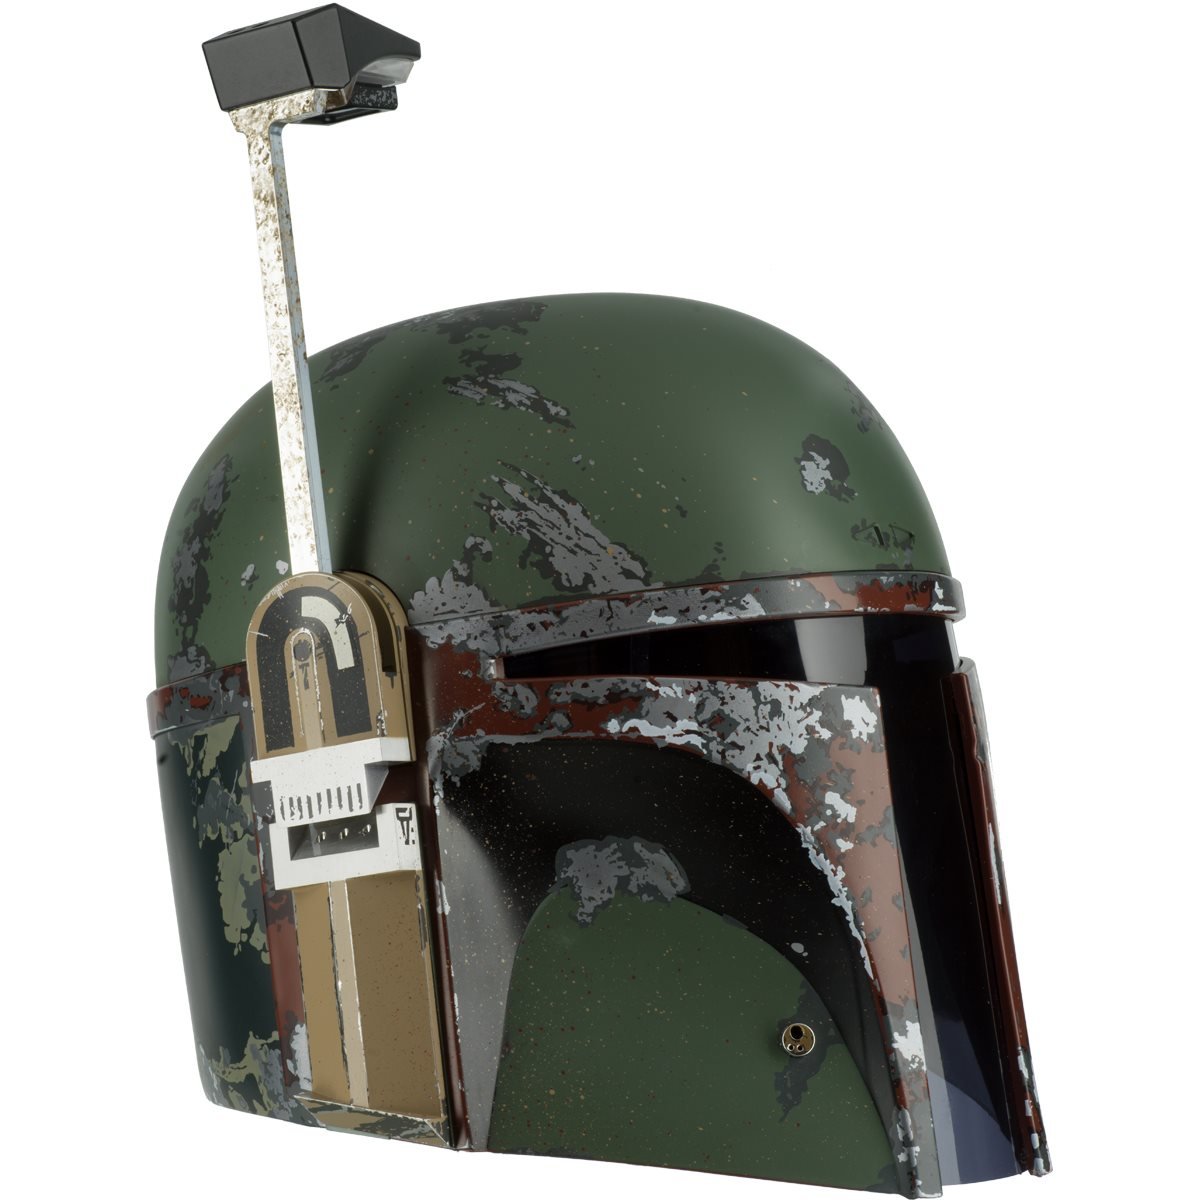 StarScorch Faceplate Space Wars Helmet from Stars